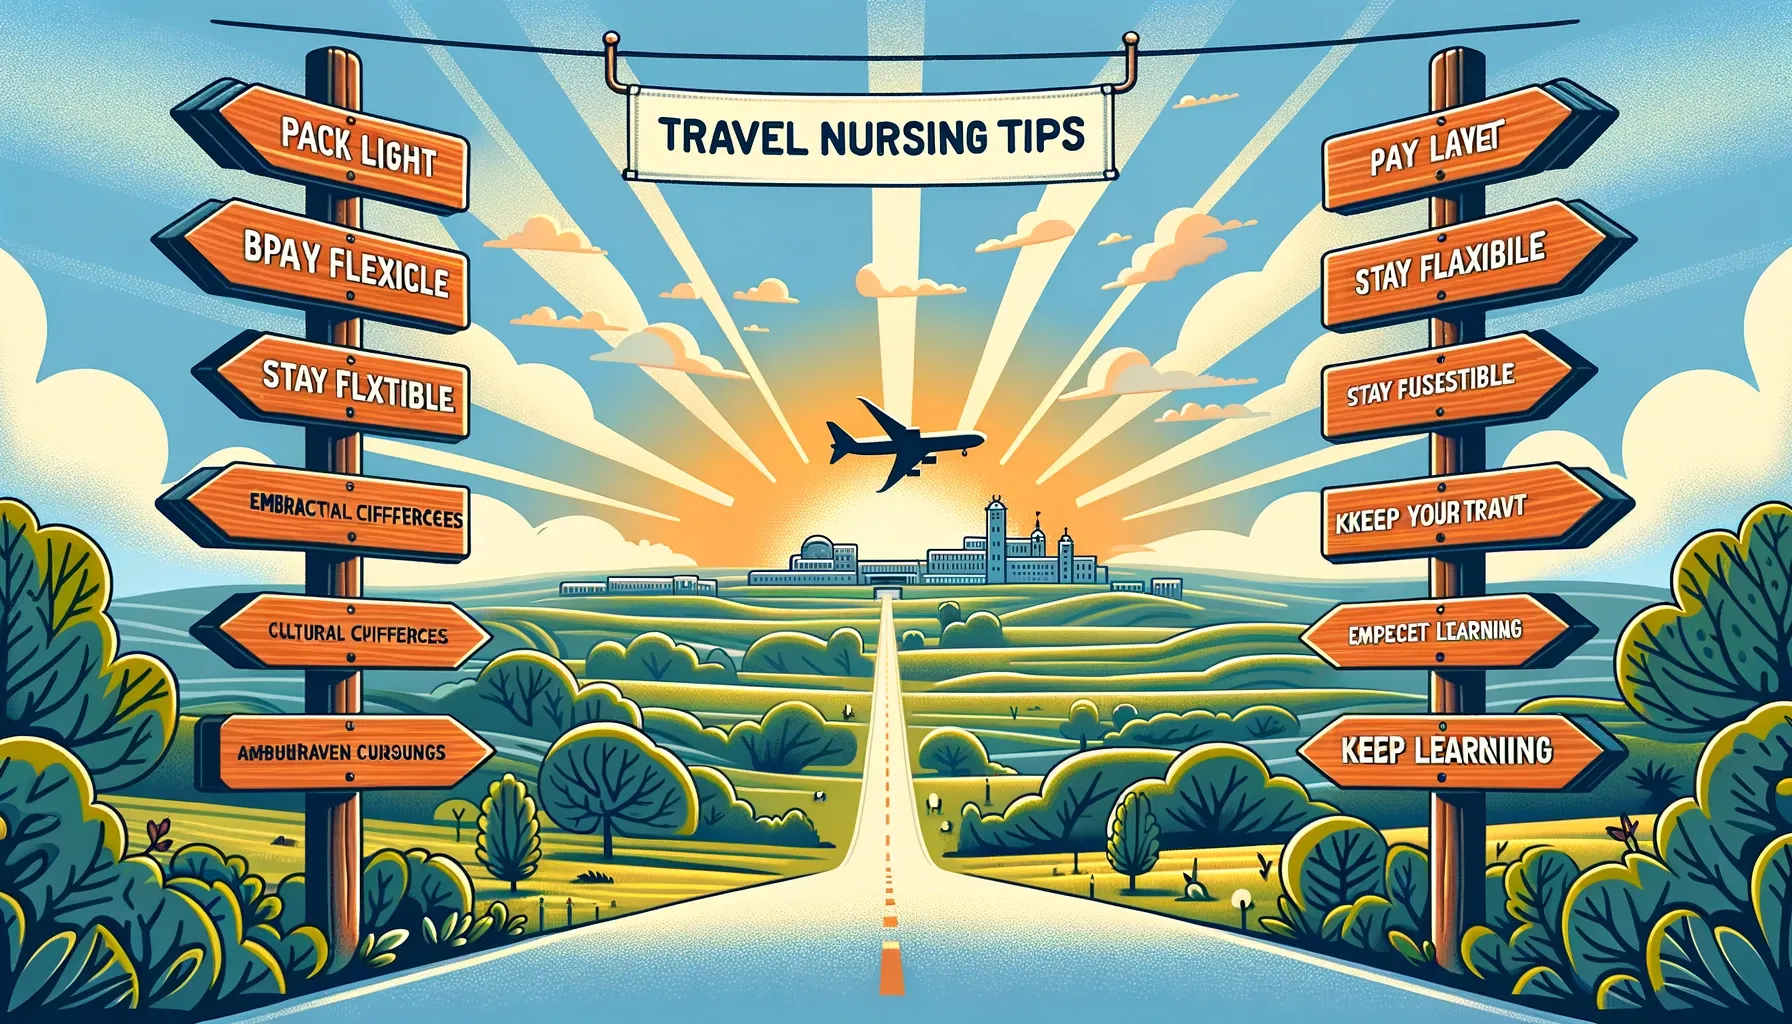 Travel Nursing Tips